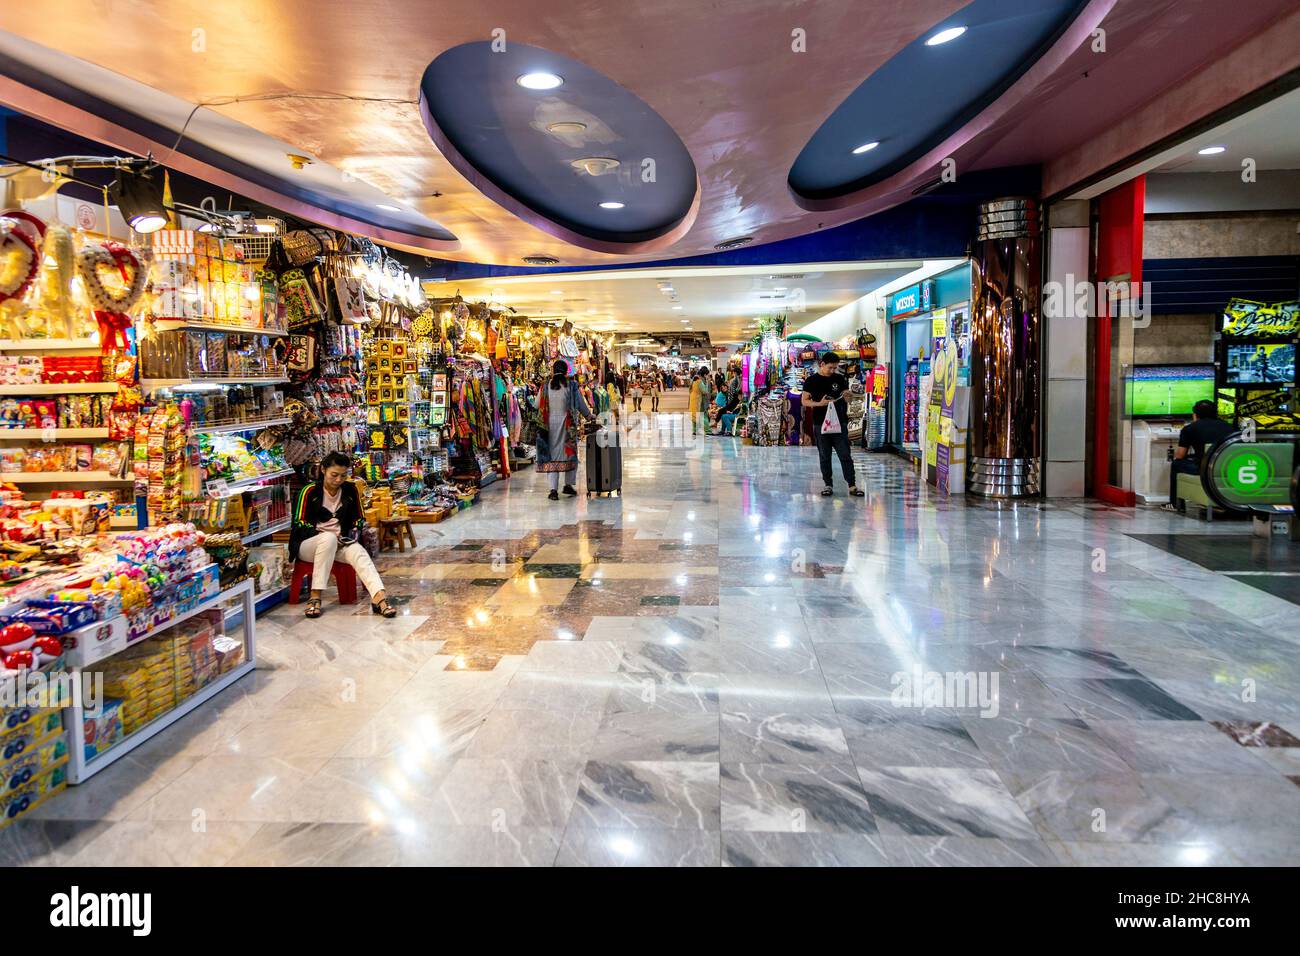 Interior of MBK Center shopping mall, Bangkok, Thailand Stock Photo